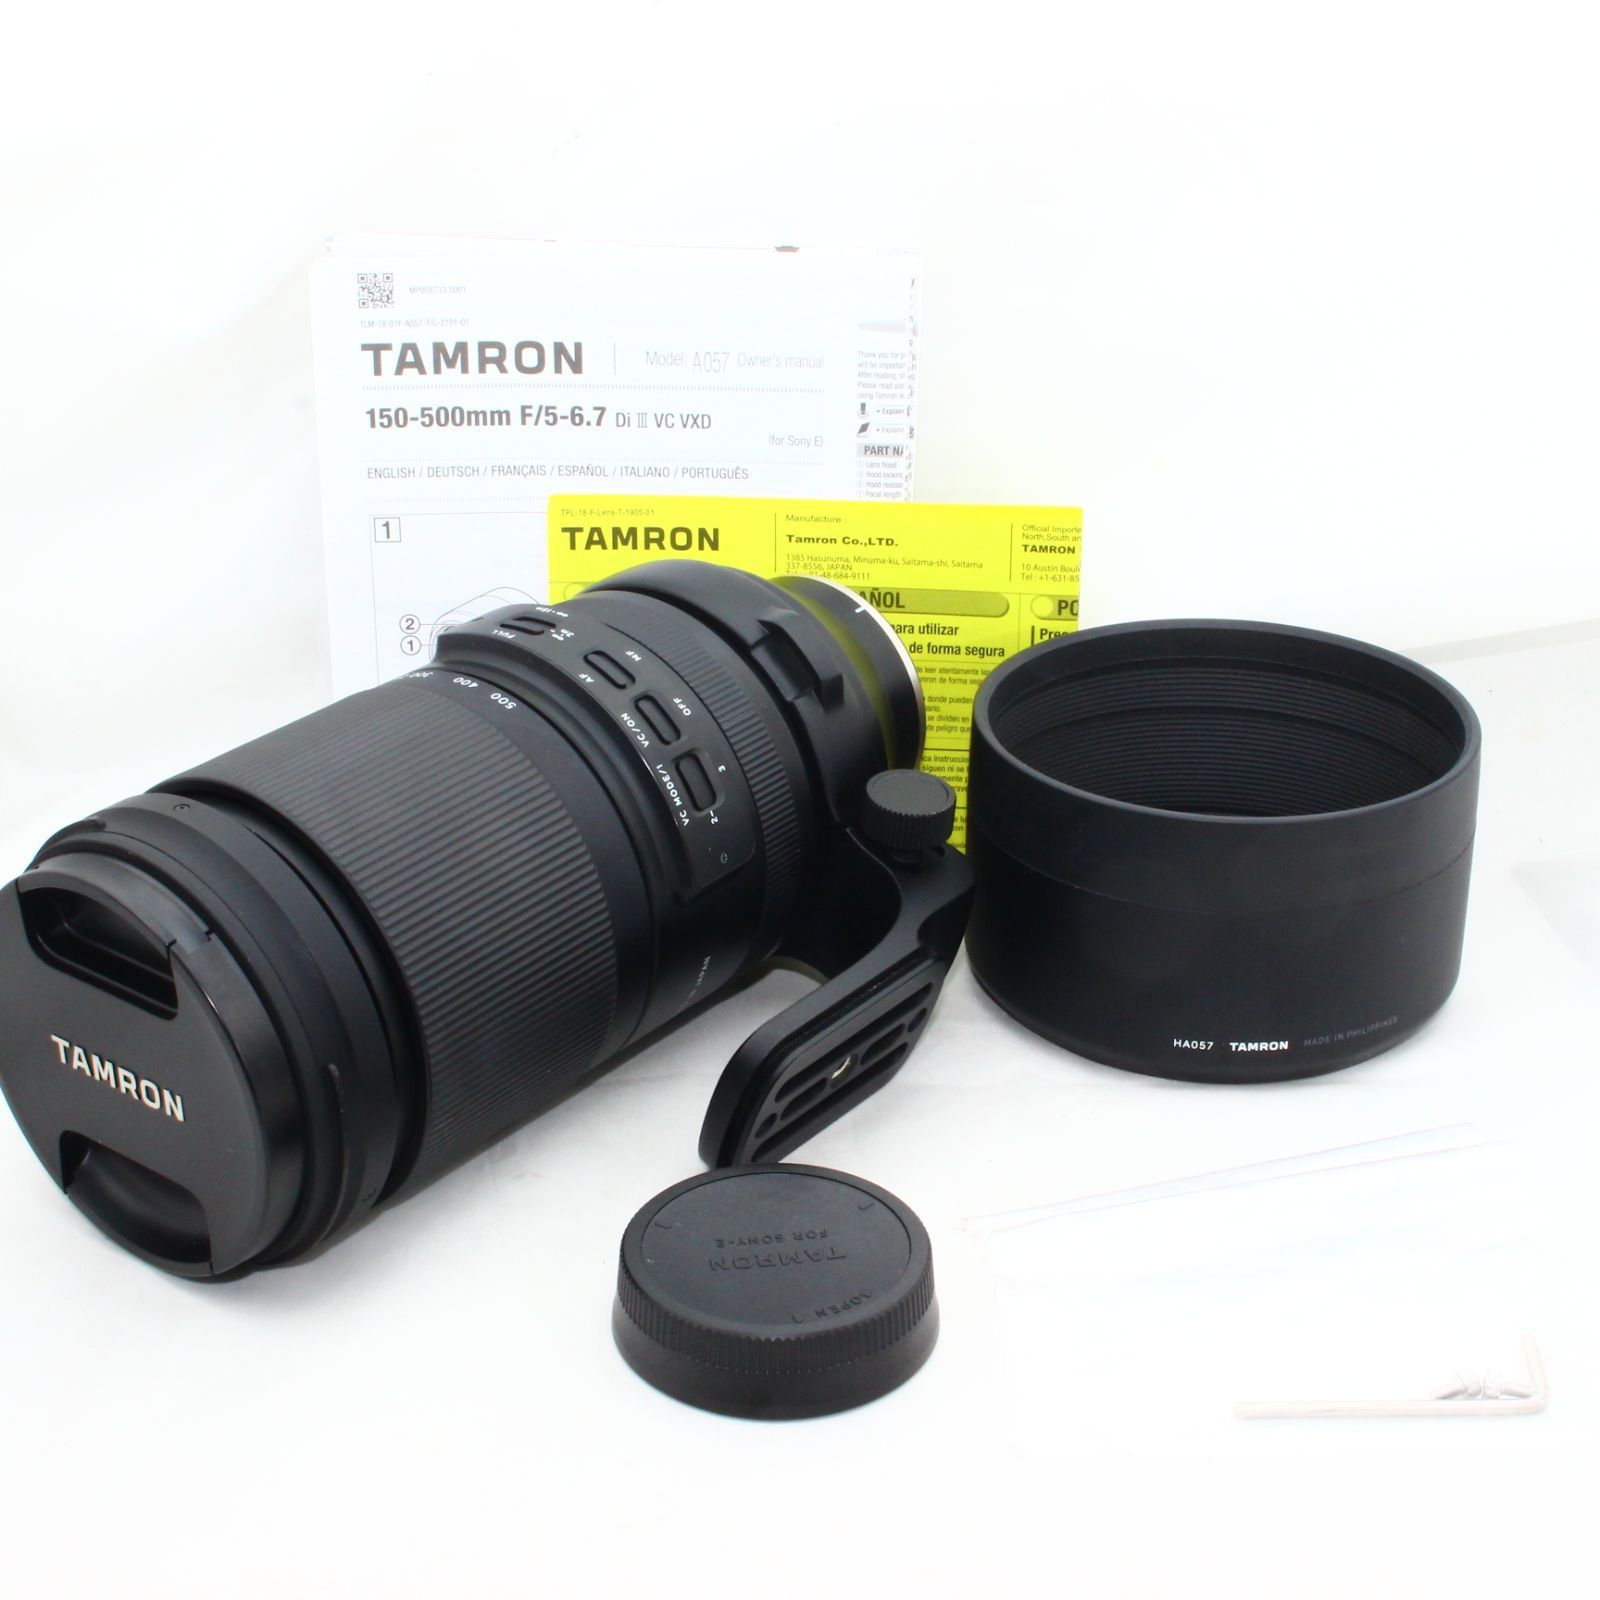 タムロン 150-500mm F/5-6.7 Di III VC VXD ソニーEマウント用 (Model